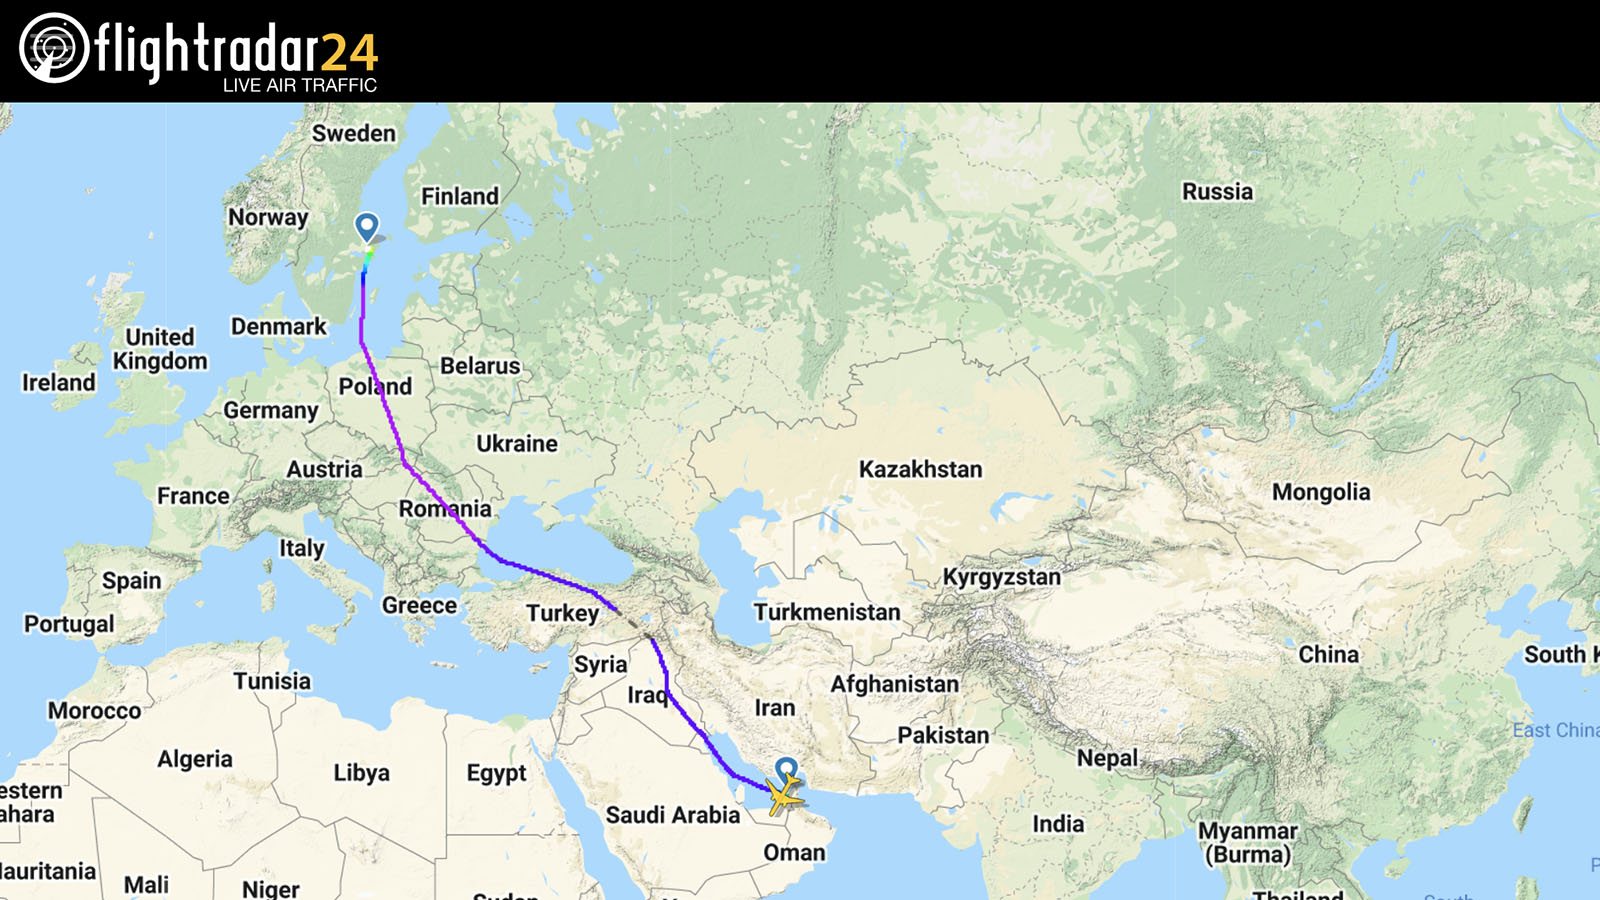 Emirates' new Dubai-Stockholm flight path